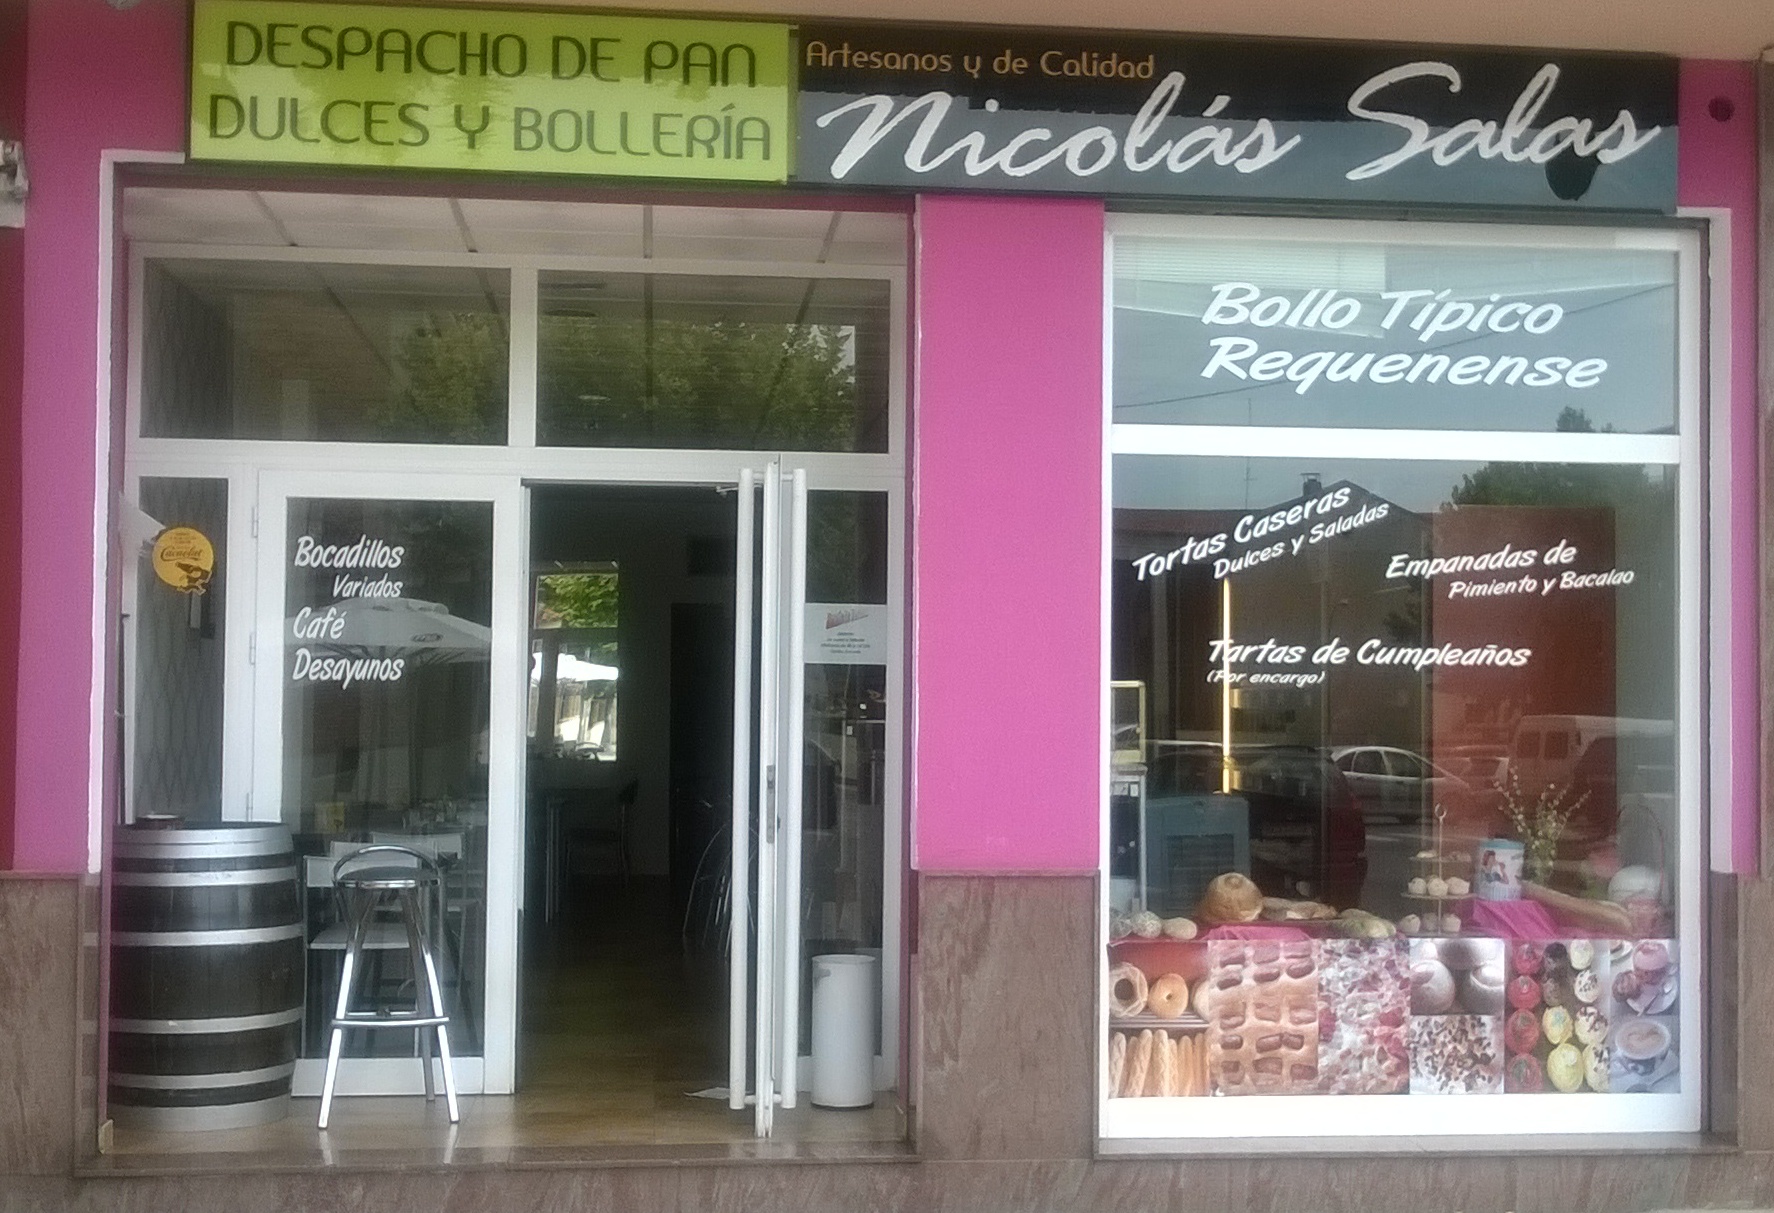 Despacho de pan Nicolás Salas